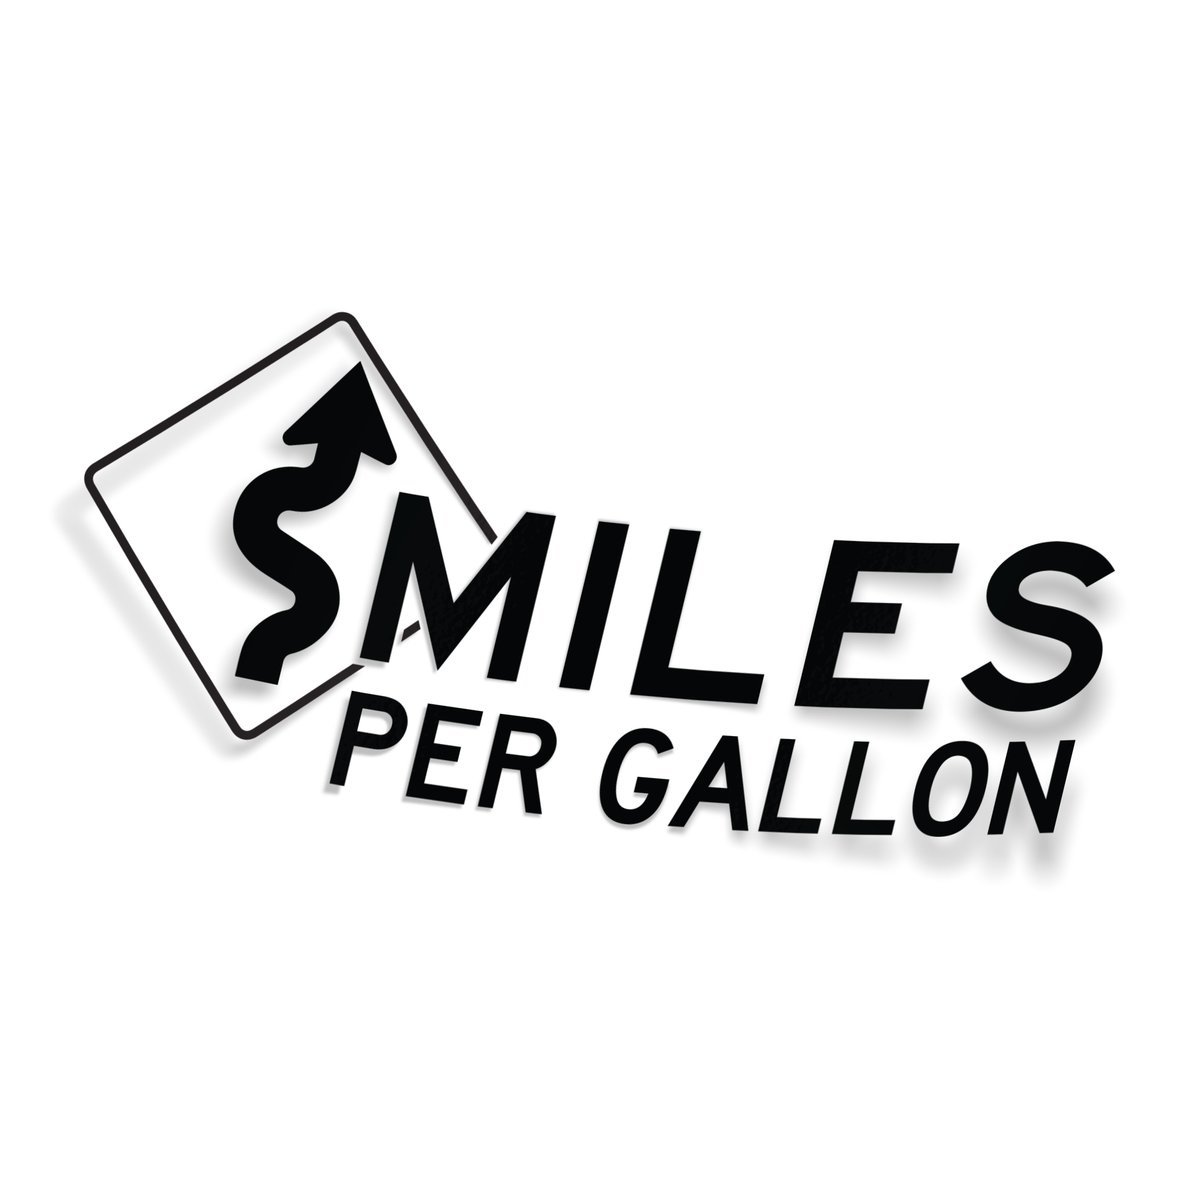 Smiles+Per+Gallon+Mockup.jpg